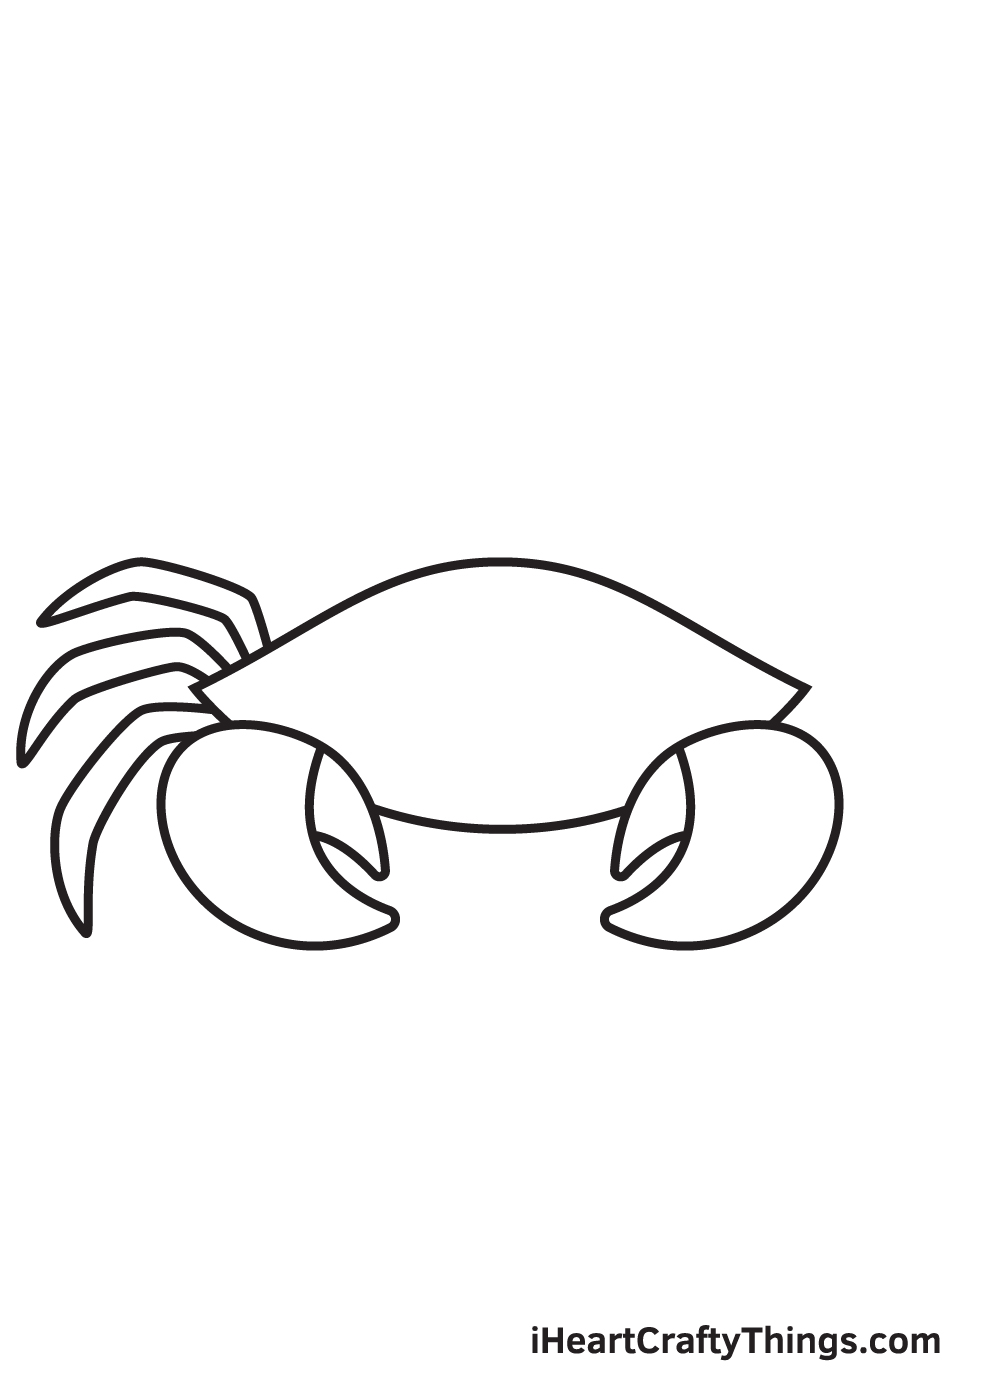 Crab Drawing – Step 4